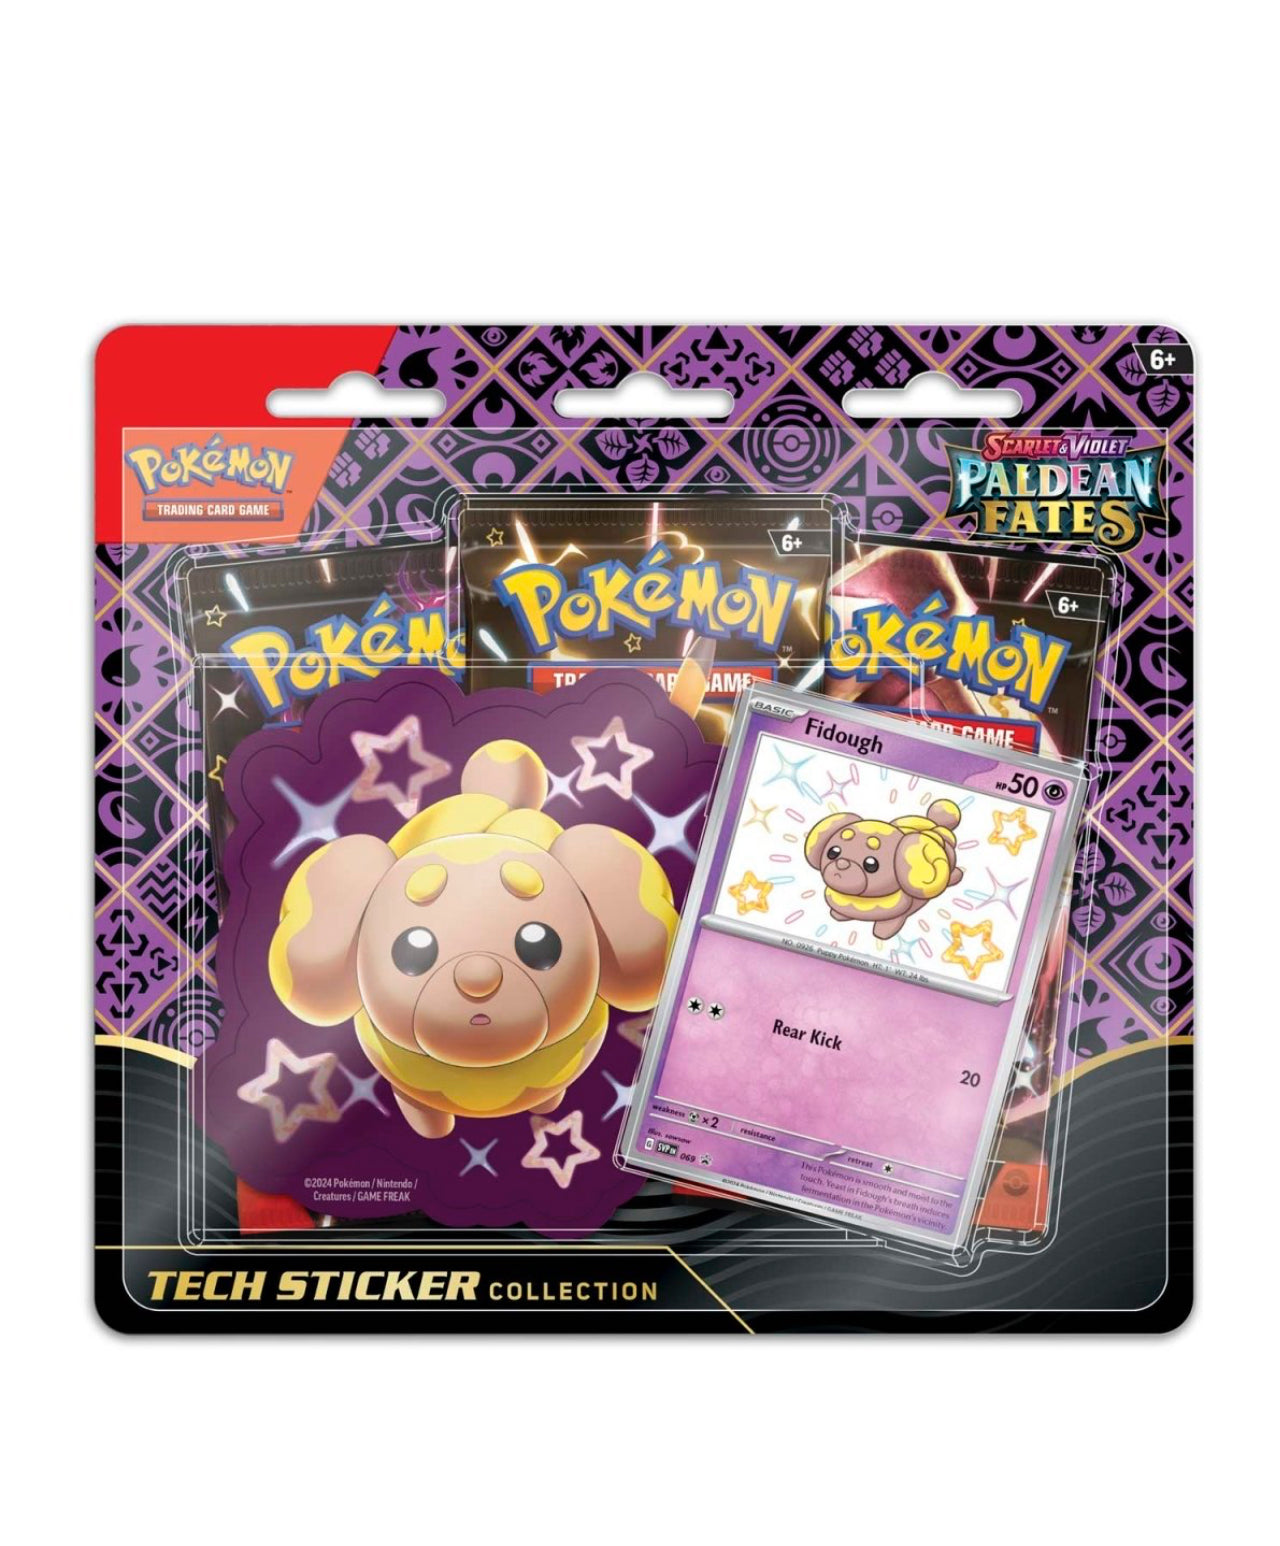 Pokémon Paldean Fates Sticker set